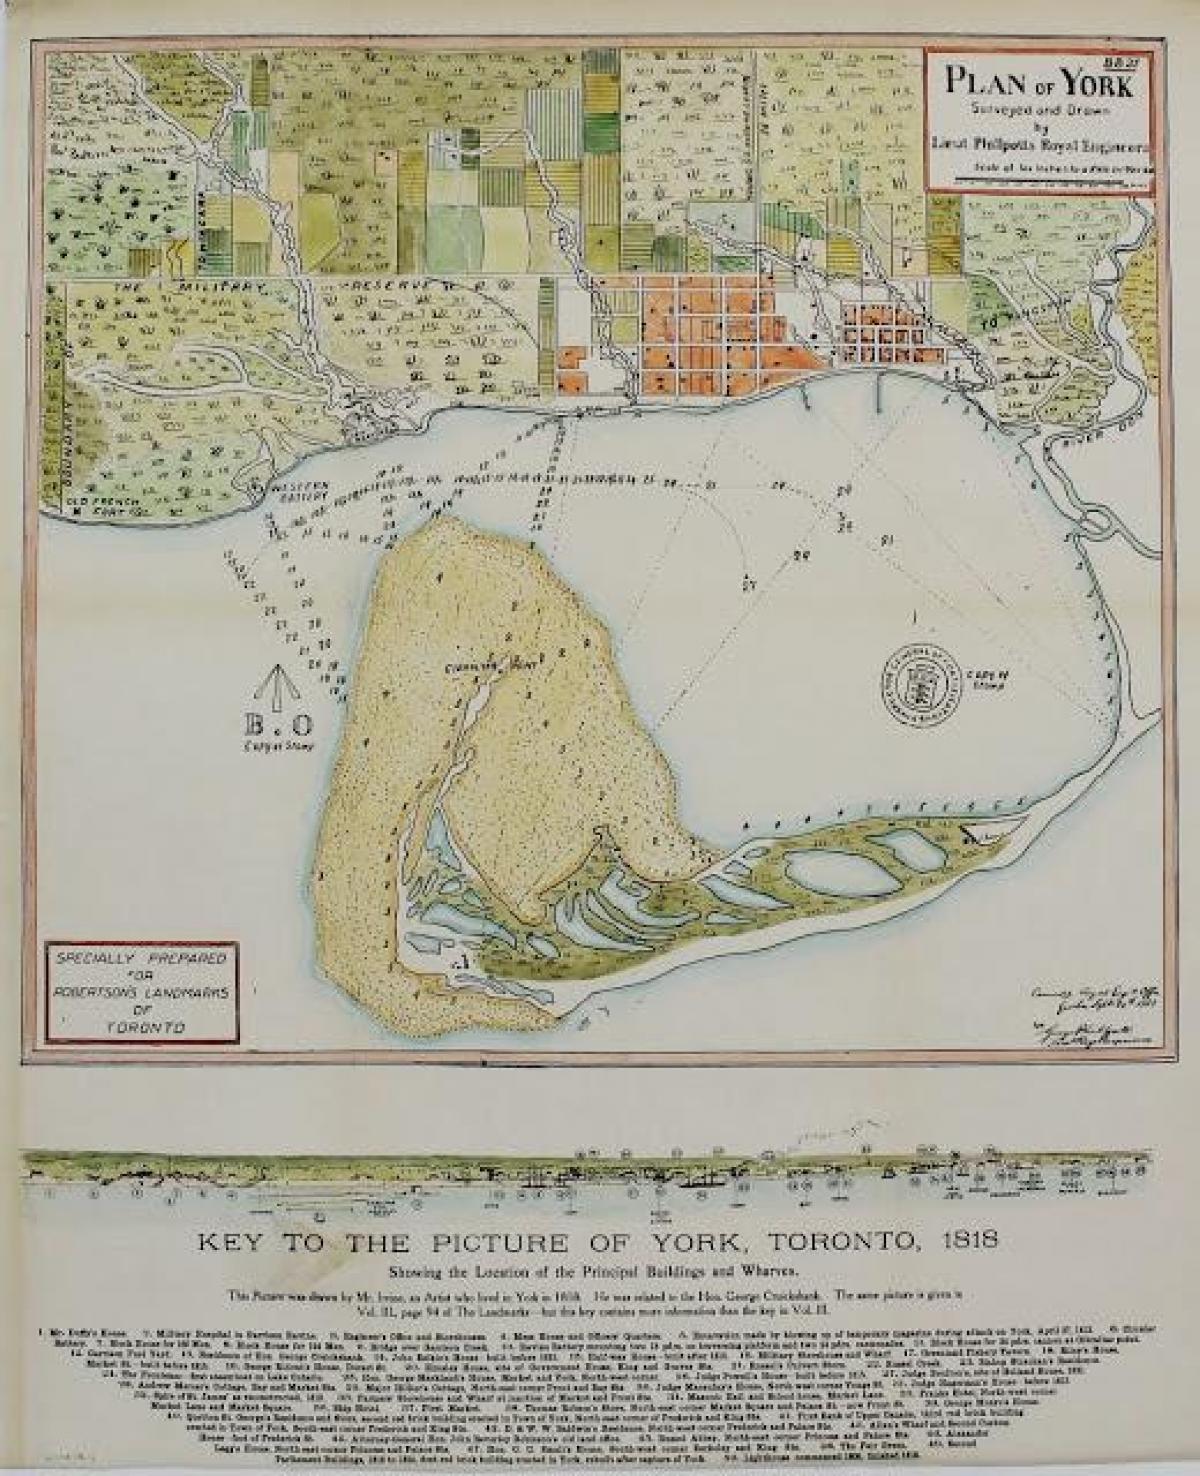 Mapa de York de Toronto 1787-1884 caricaturescos versión